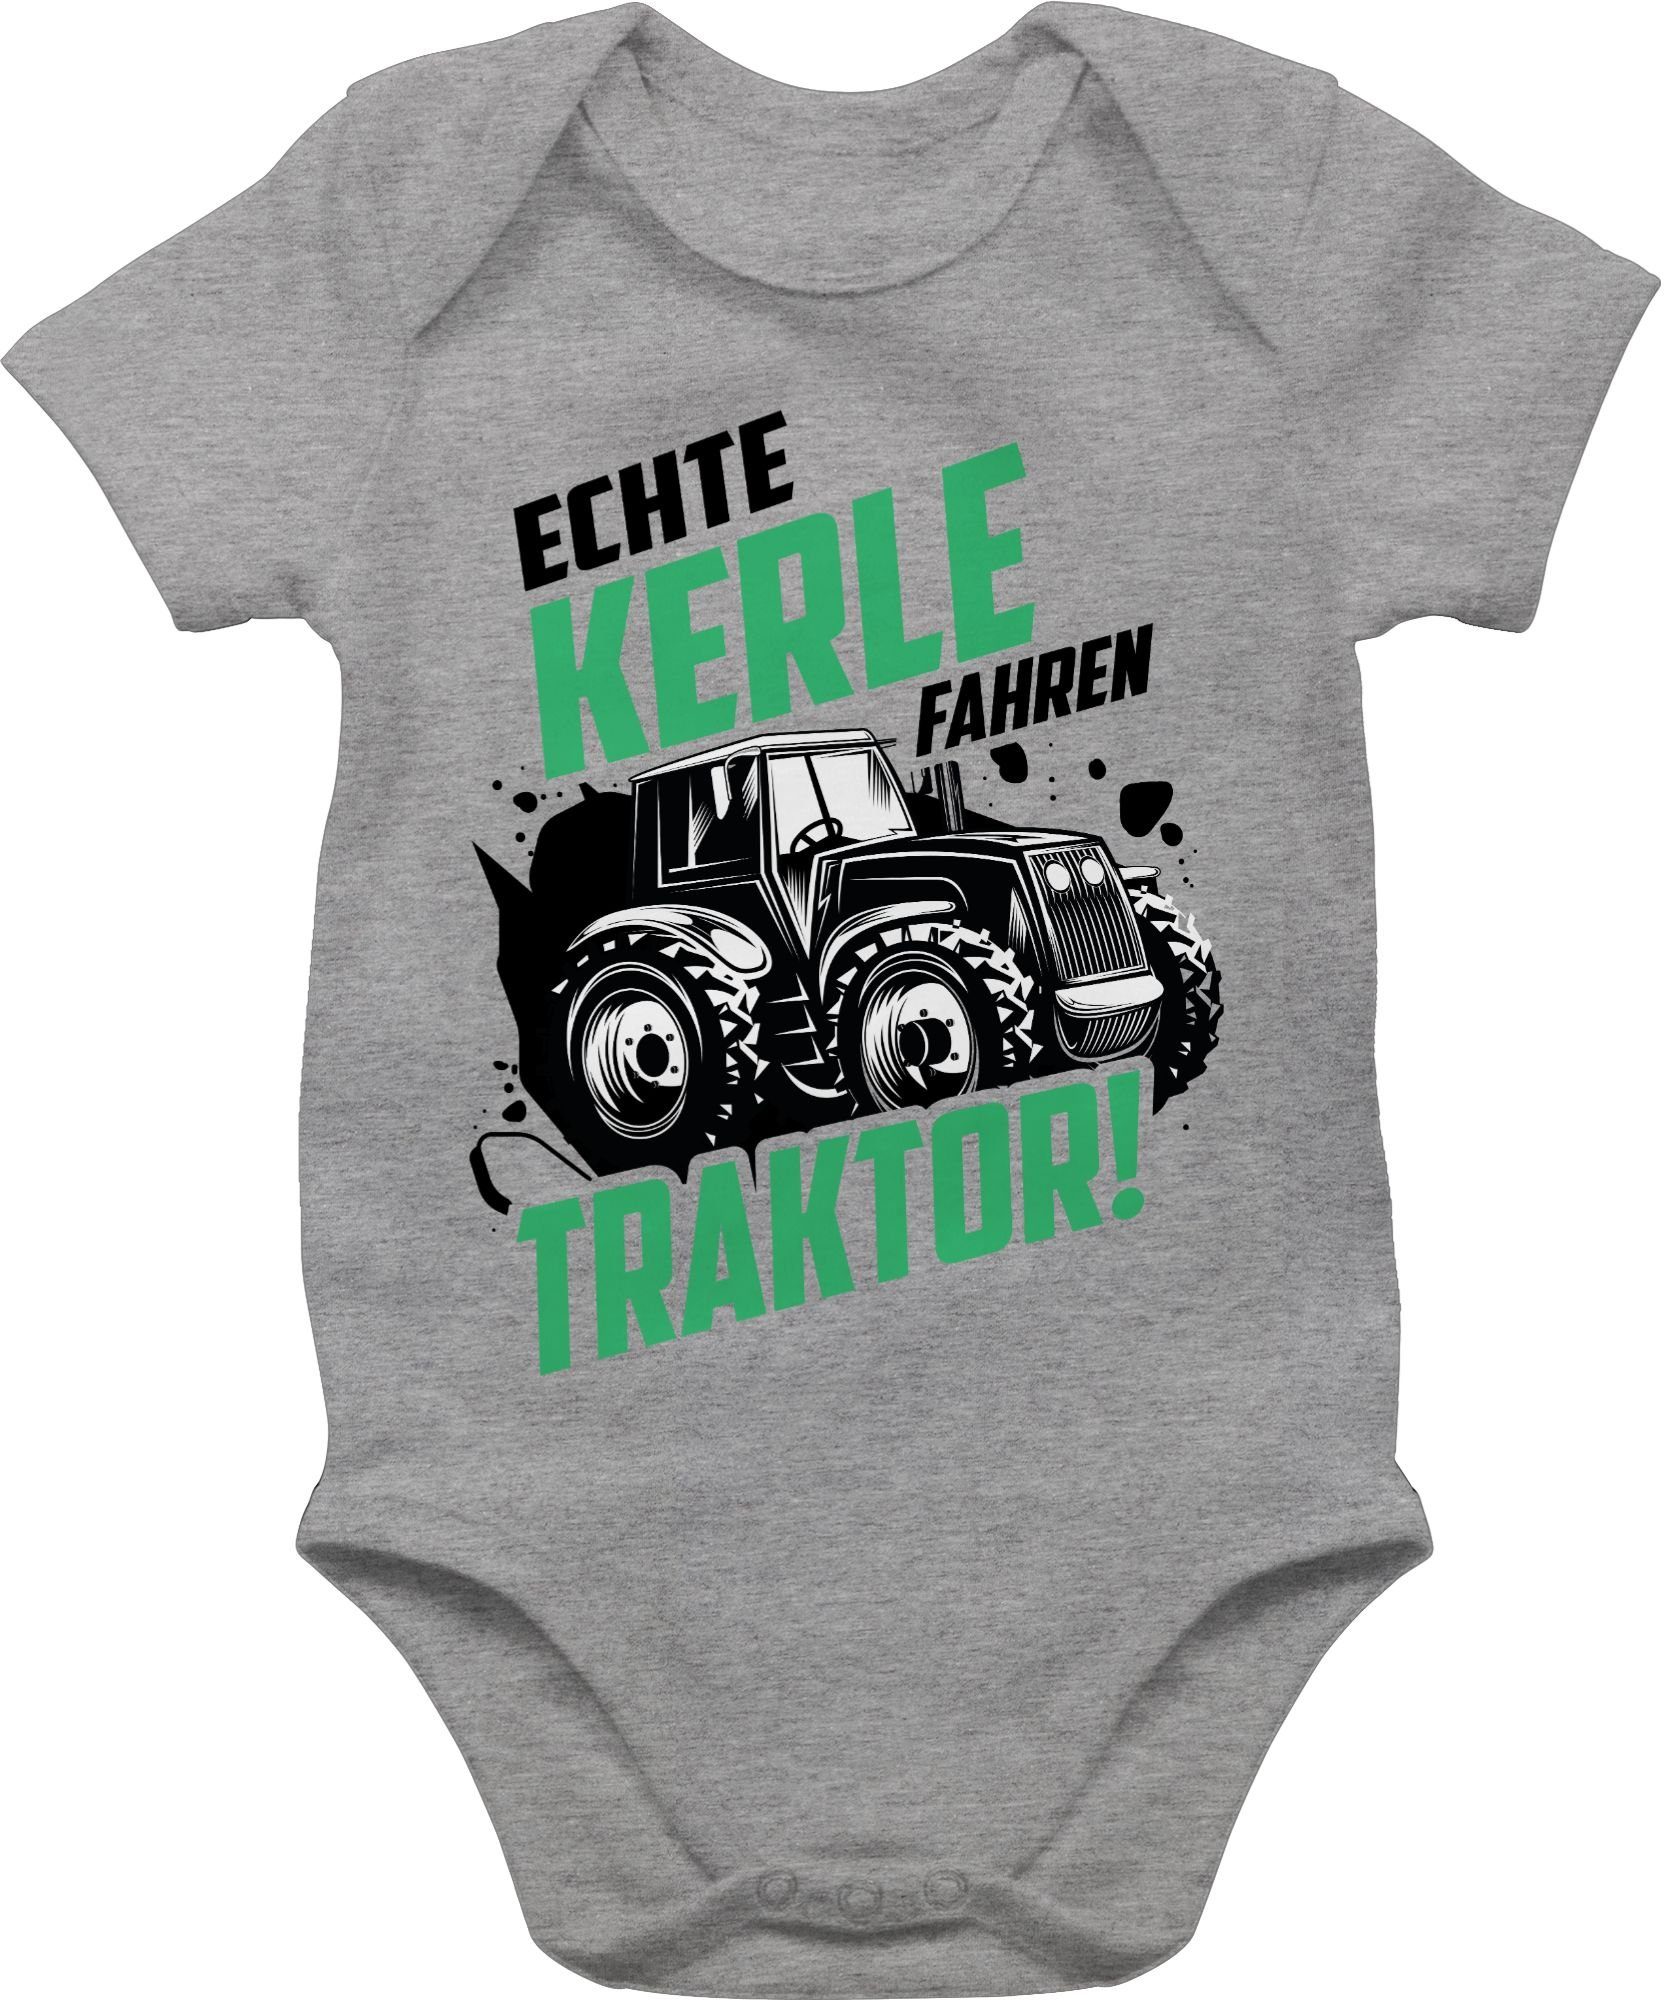 Shirtracer Shirtbody Echte Kerle fahren Traktor Trecker Landwirt Bauer Geschenk Baby Bagger Traktor und Co. 1 Grau meliert